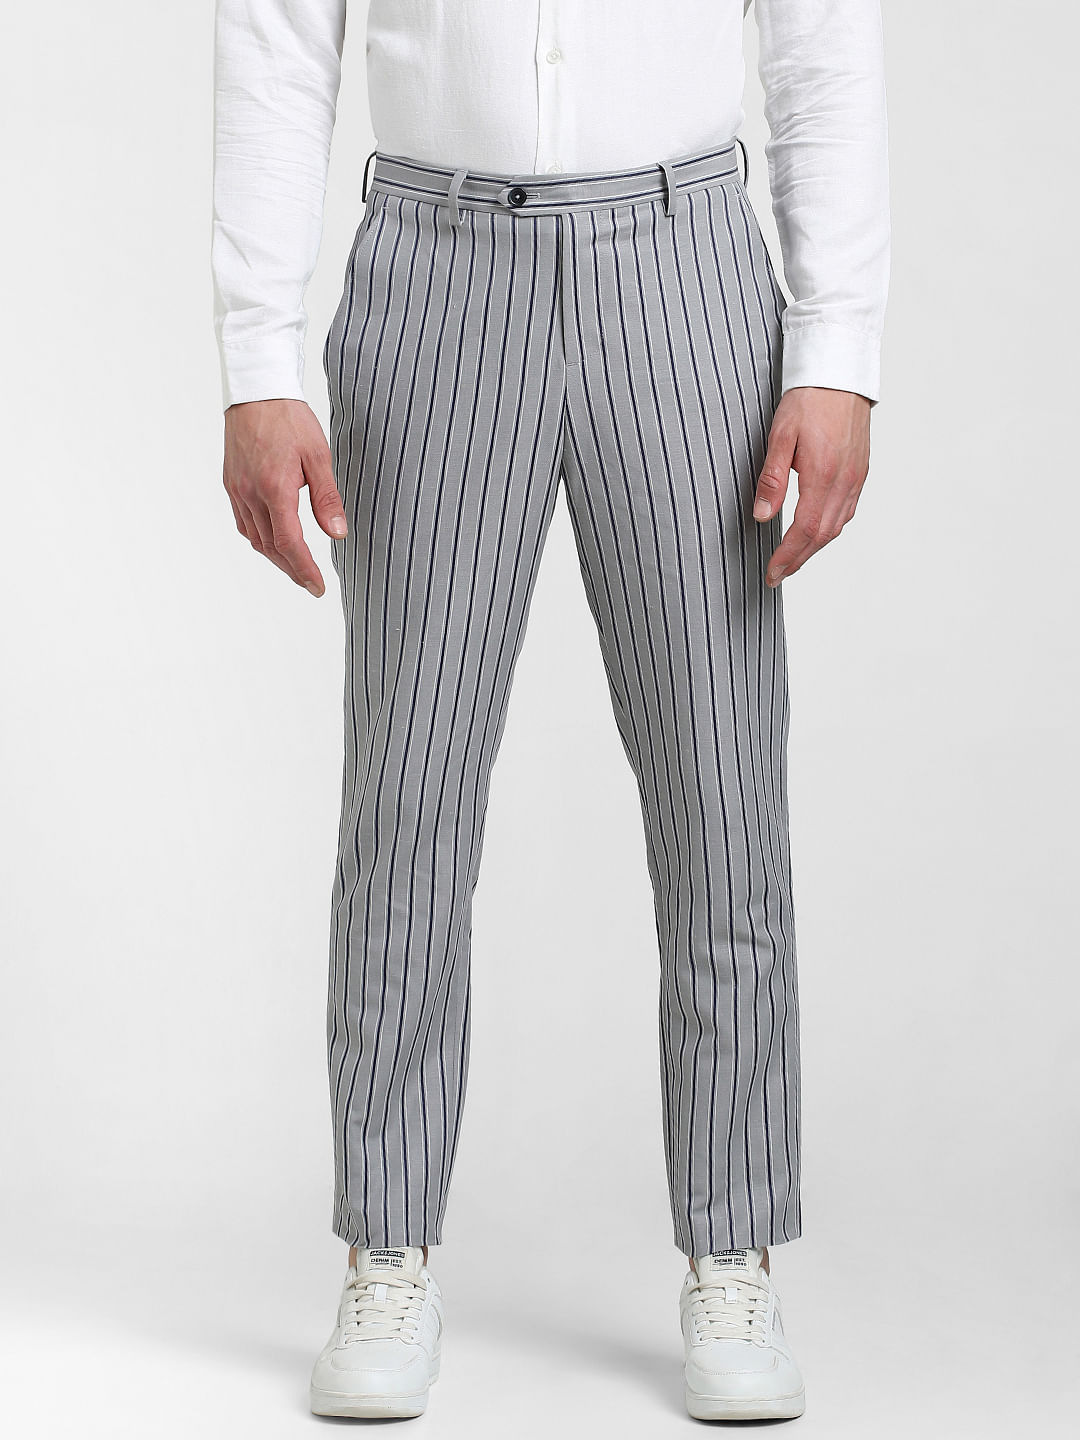 Pentagramme Black Steampunk Style Striped Trousers for Men -  DarkinCloset.com